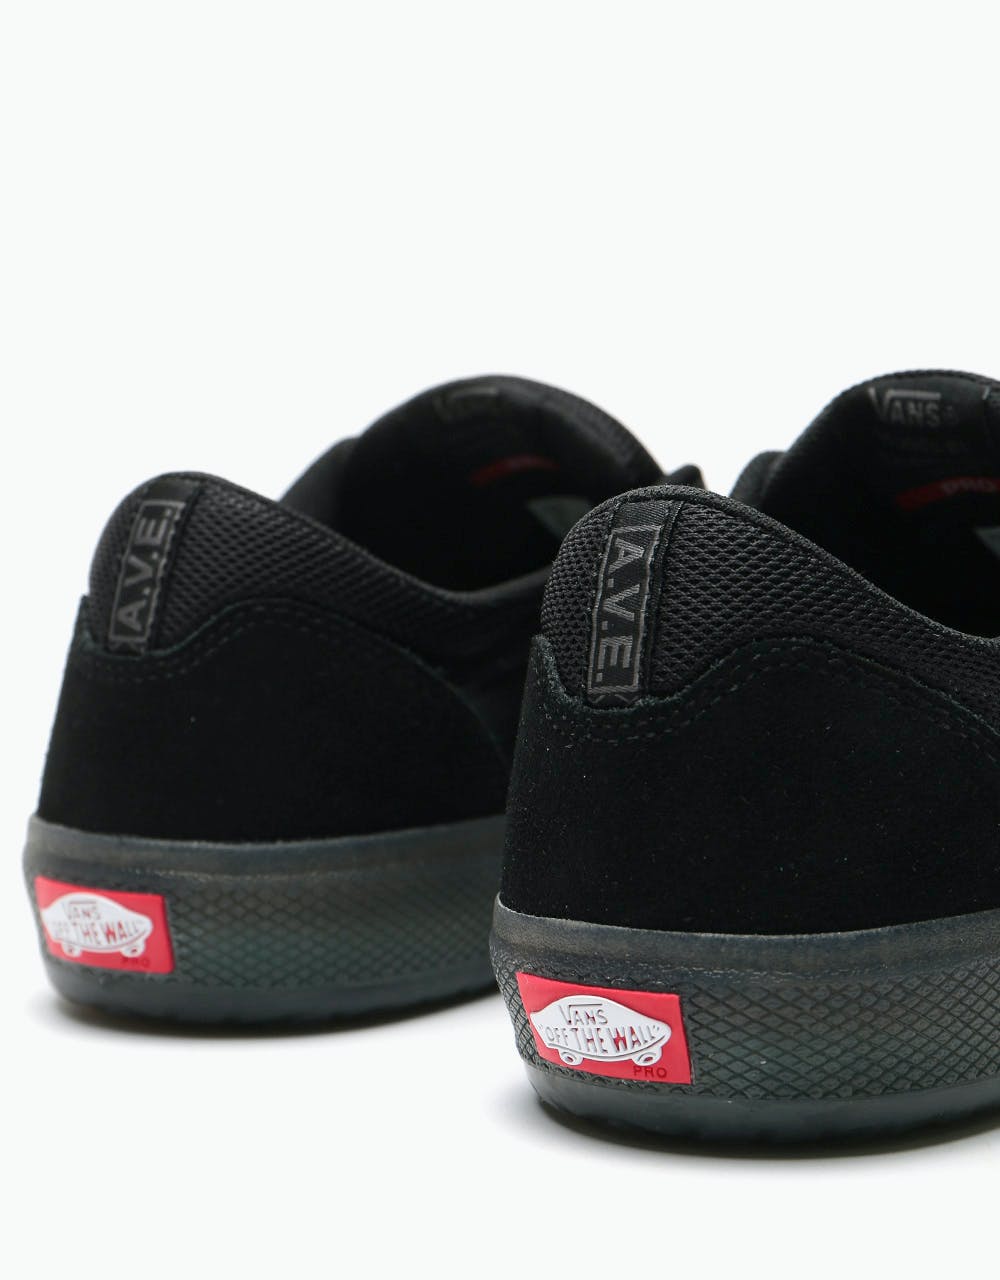 Vans AVE Pro Skate Shoes - Black/Smoke